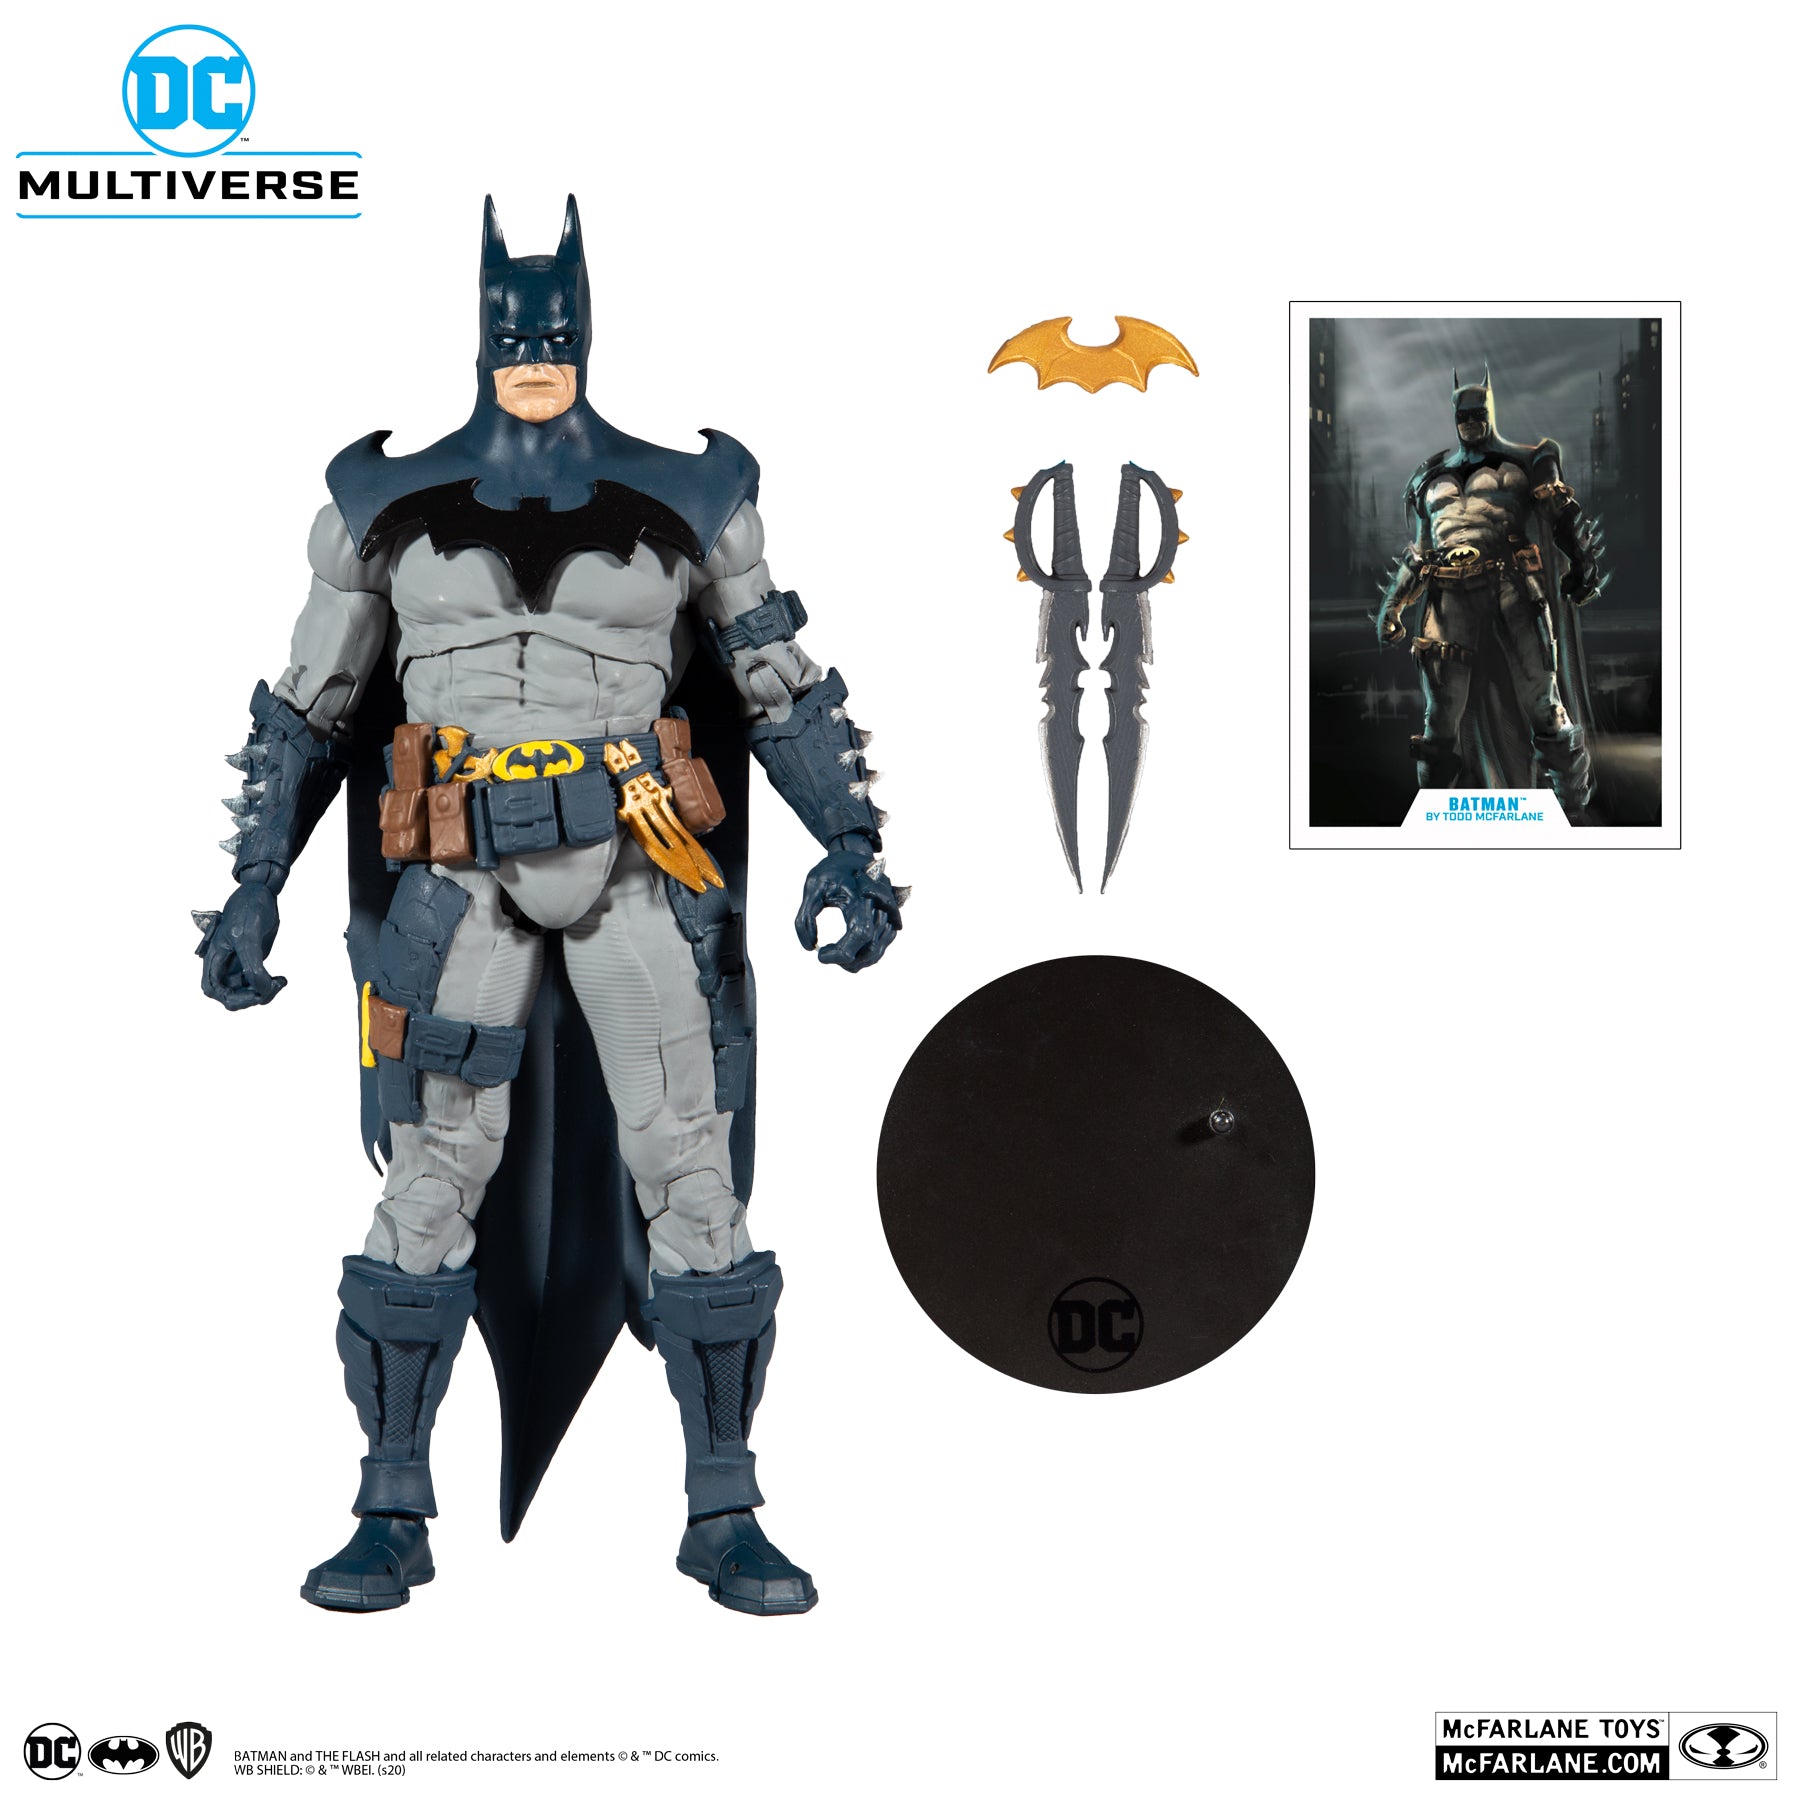 DC Multiverse Batman Designed by Todd McFarlane - McFarlane Toys-2